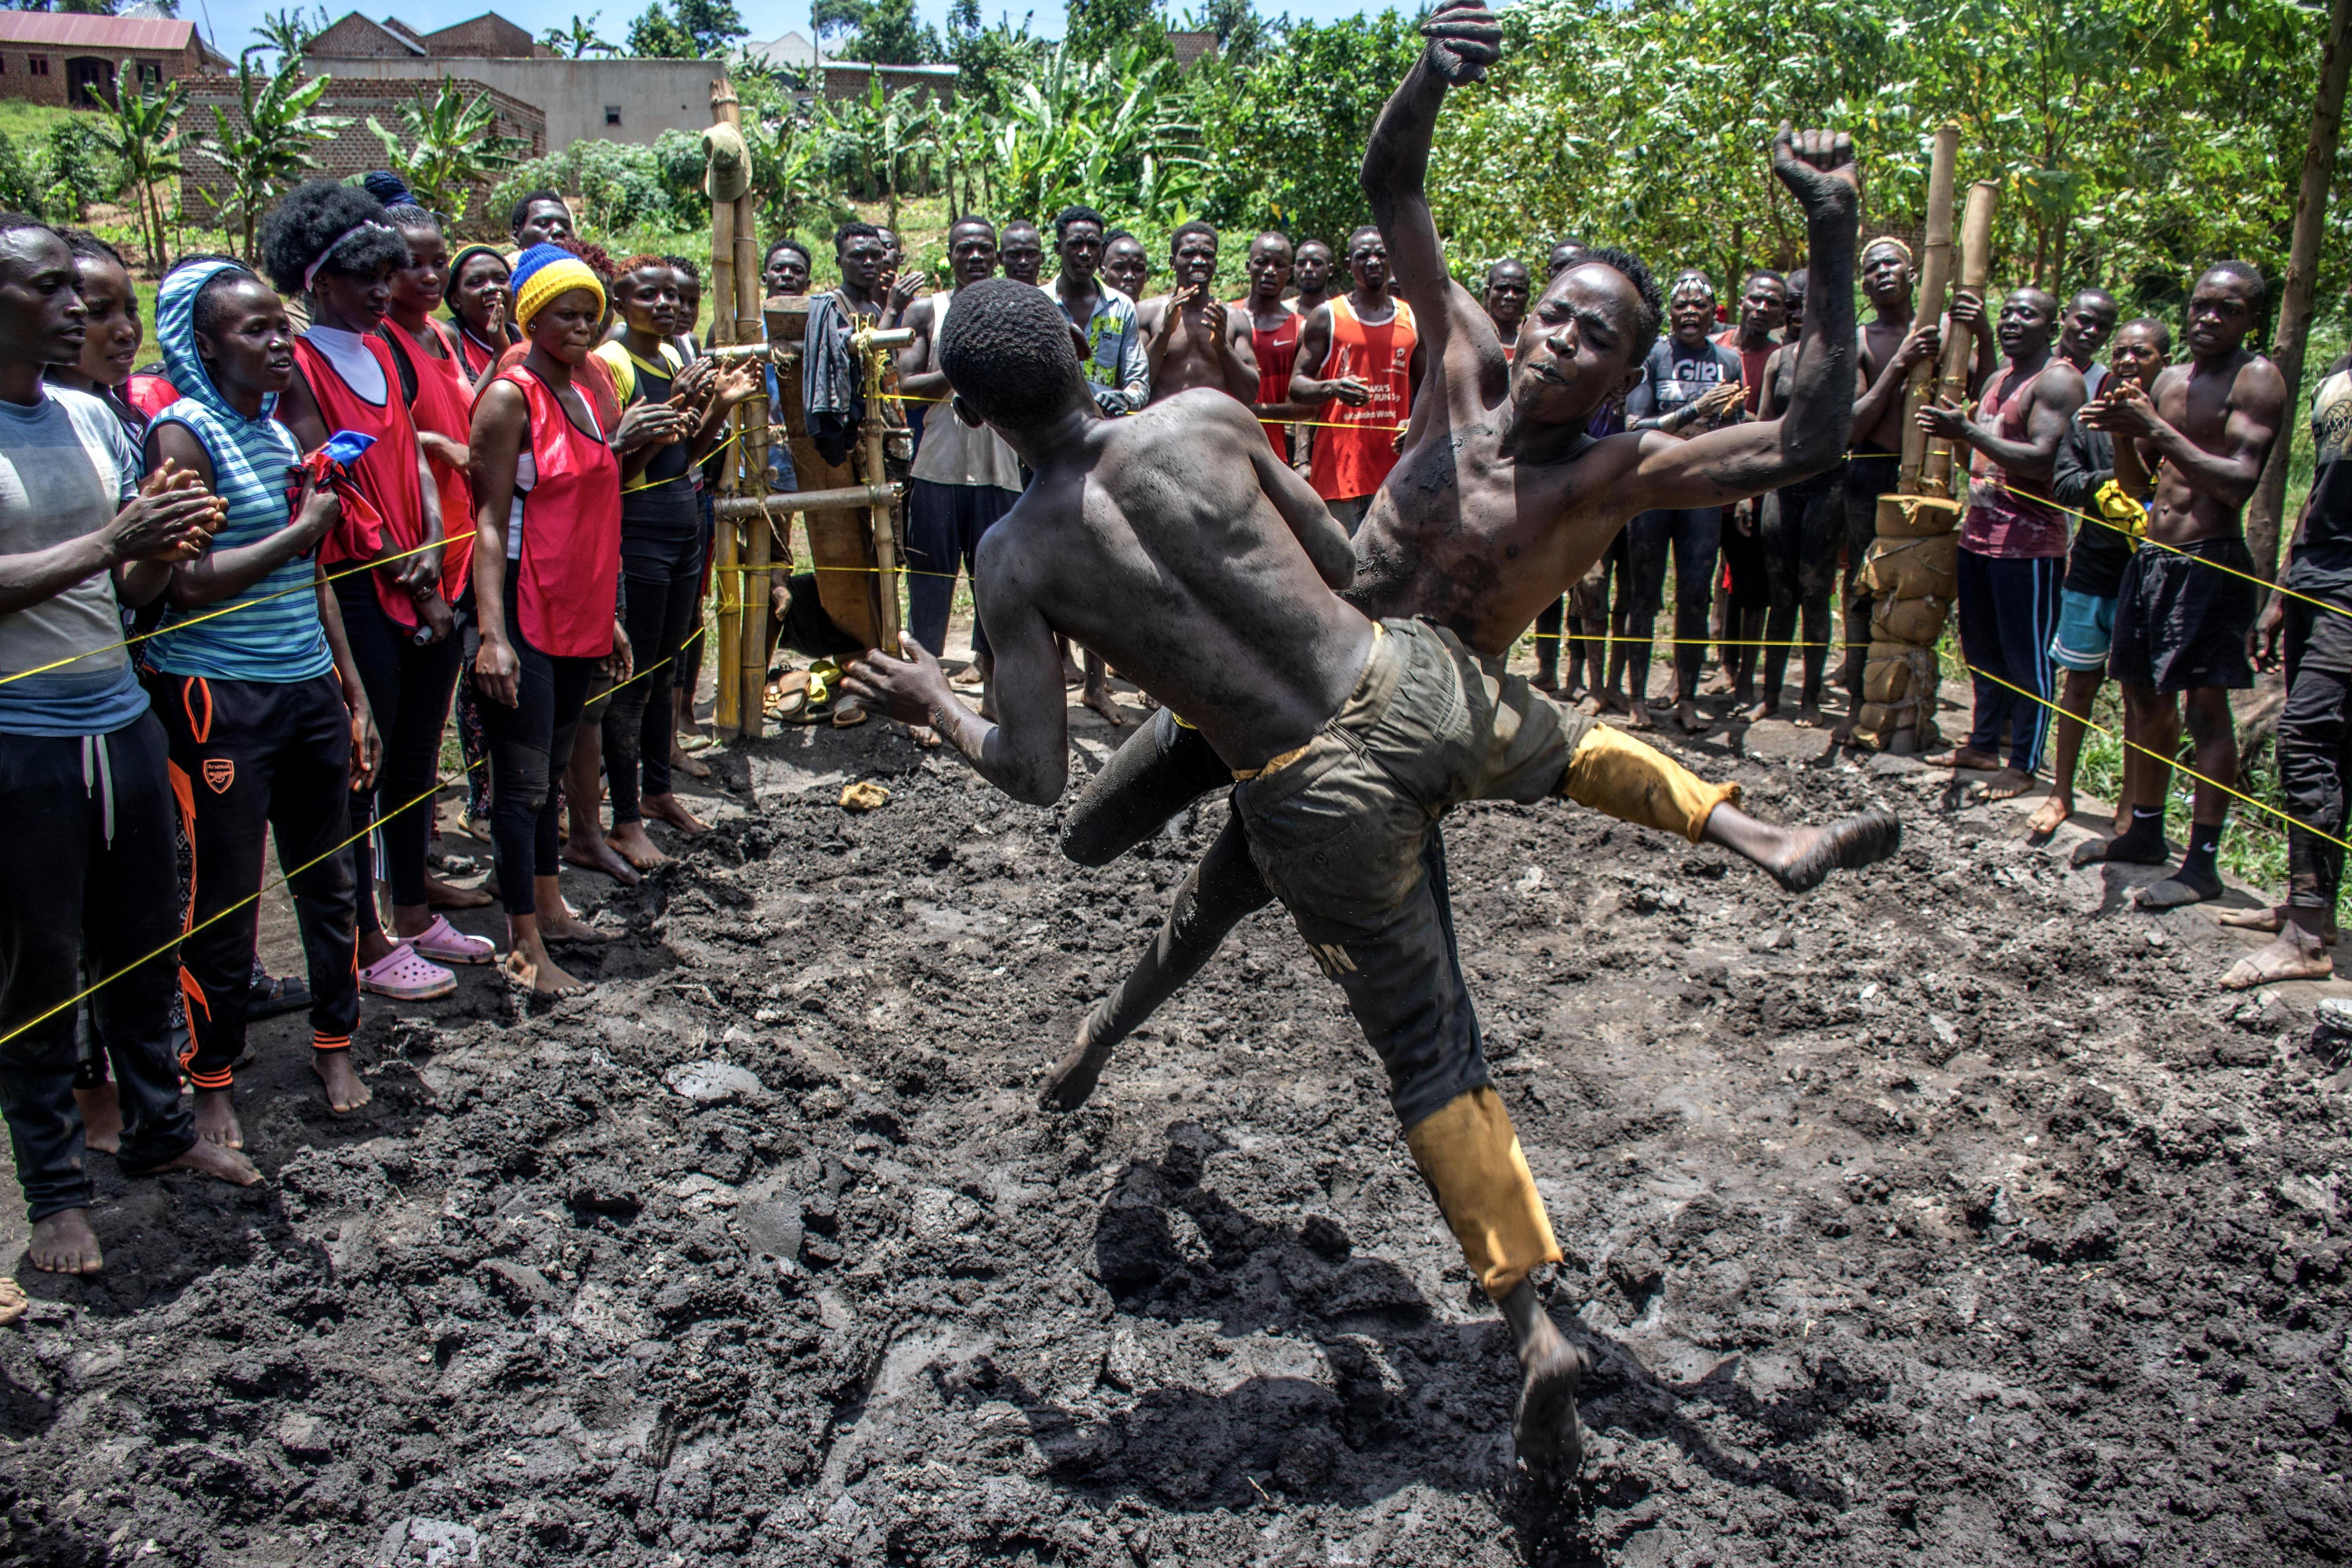 Ugandan mud wrestlers dream of glory on world stage